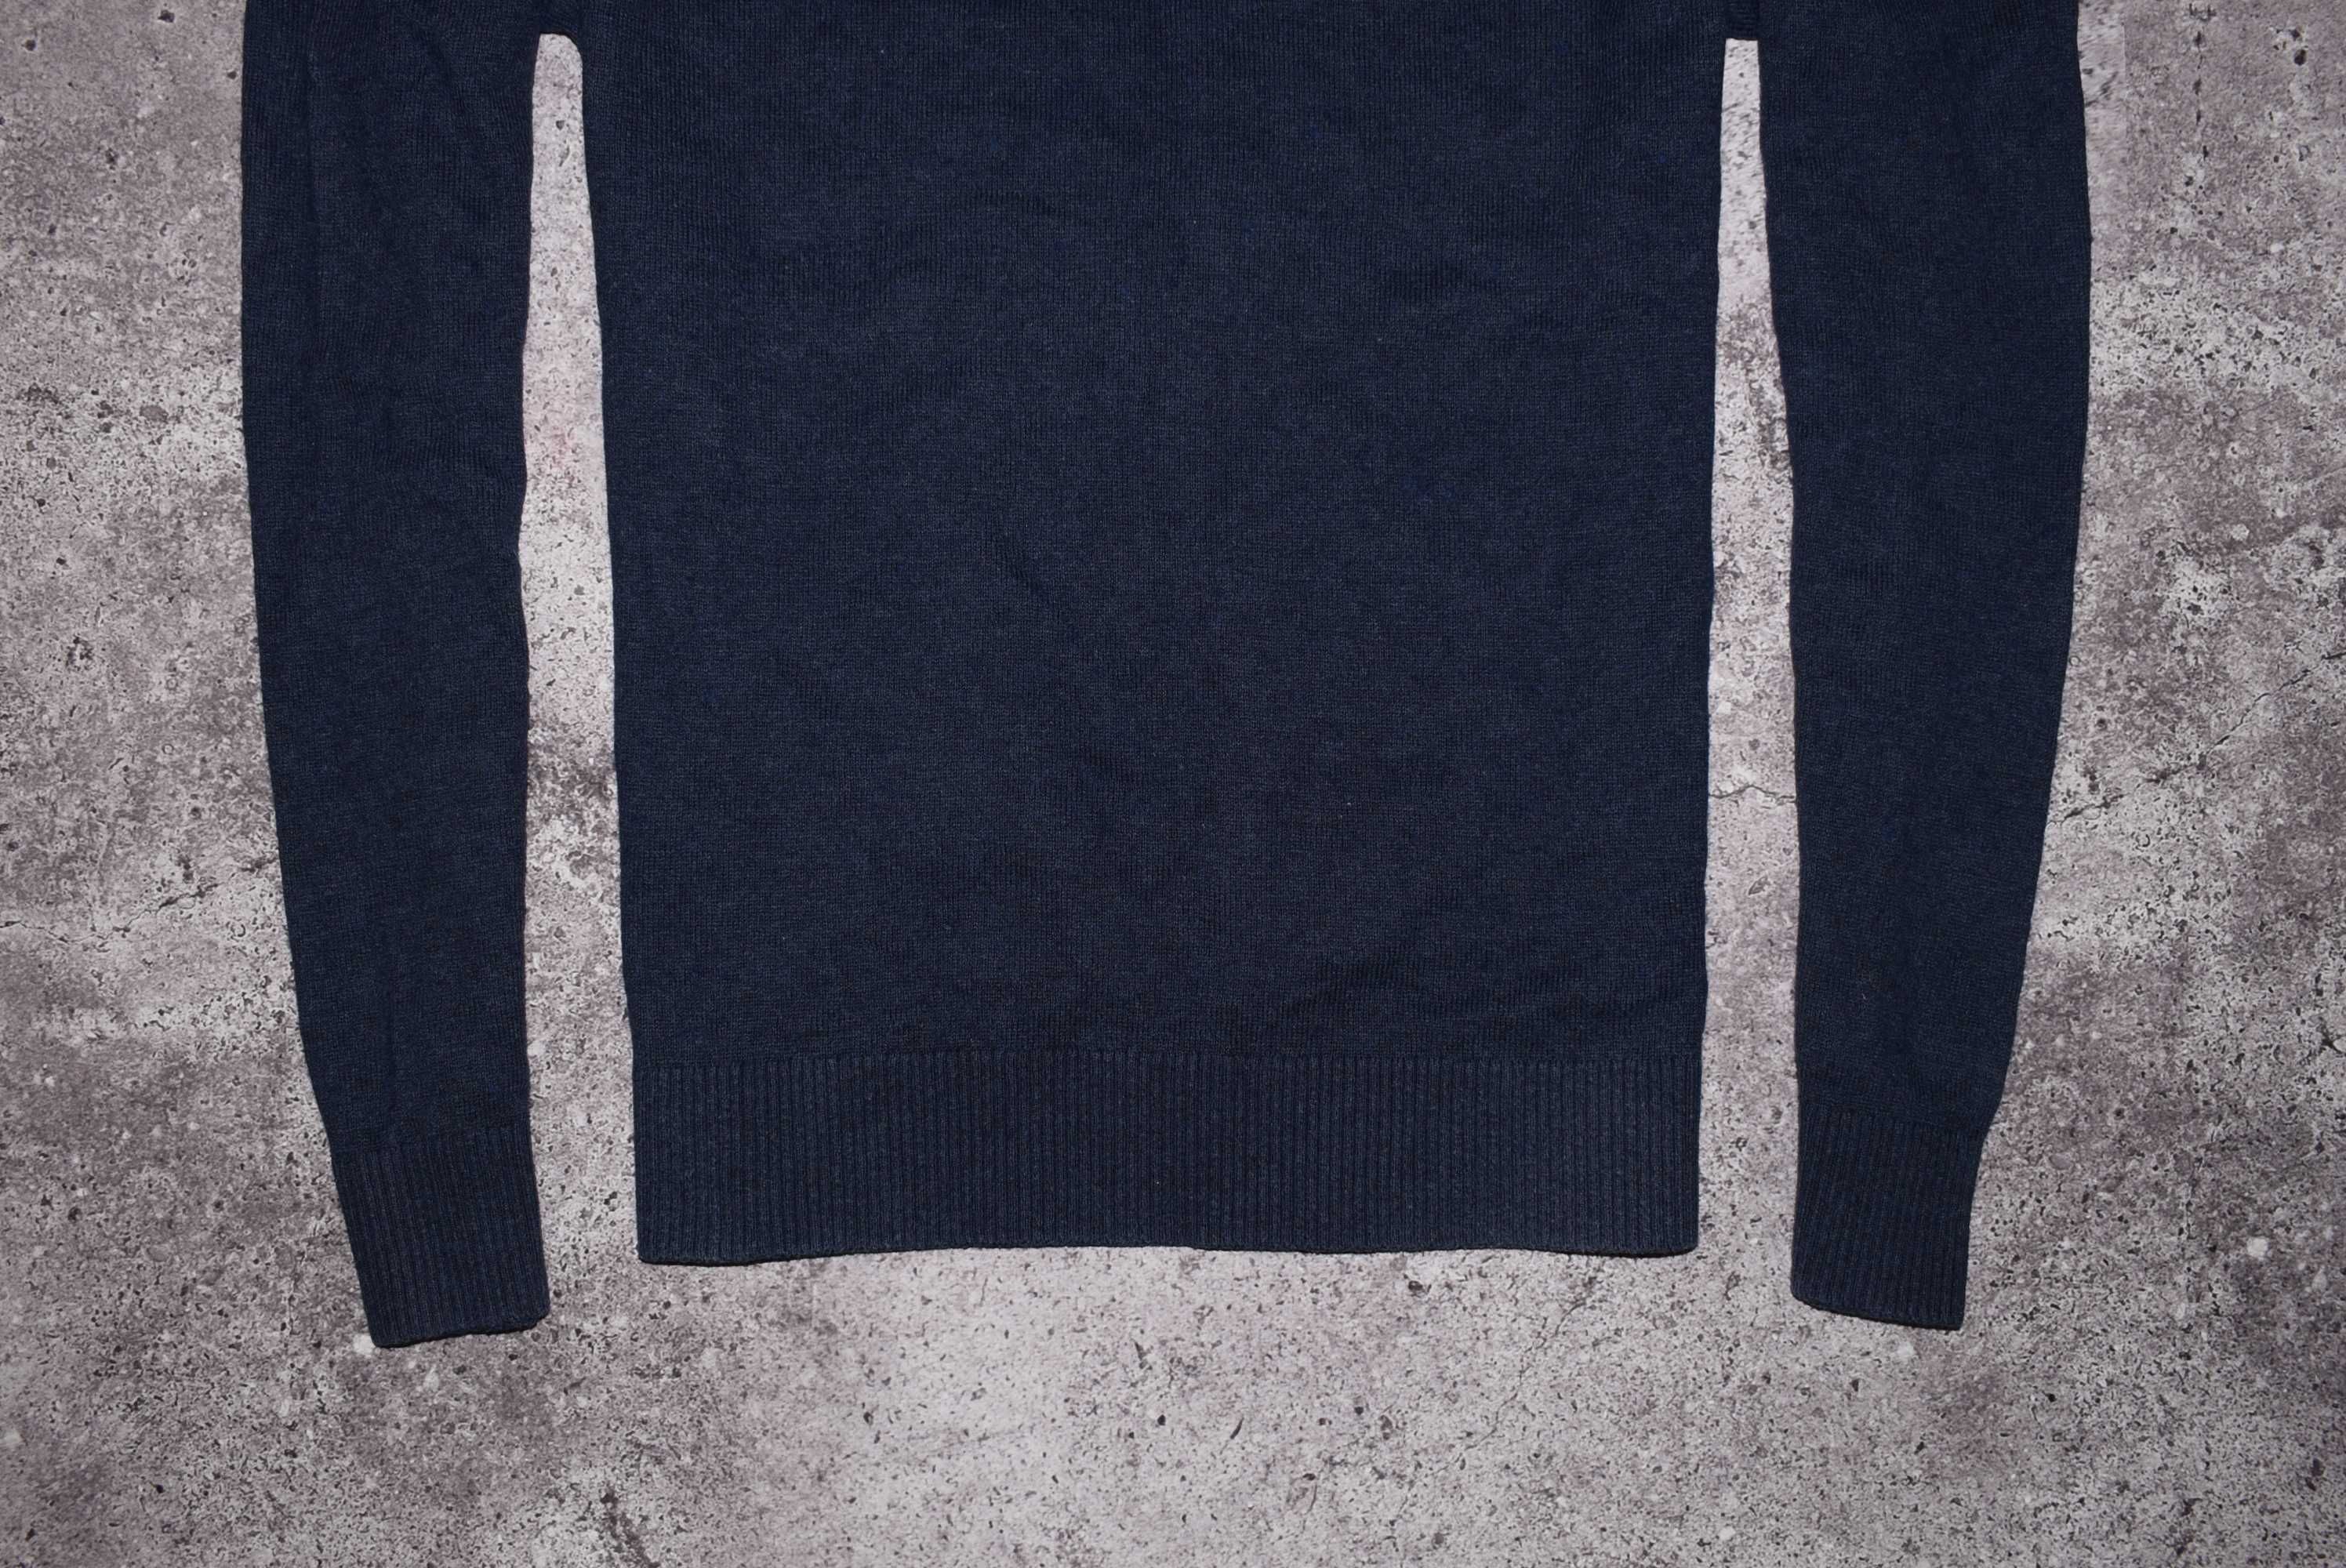 Tommy Hilfiger Cotton Cashmere Sweater (Мужской Свитер Томми Хилфигер